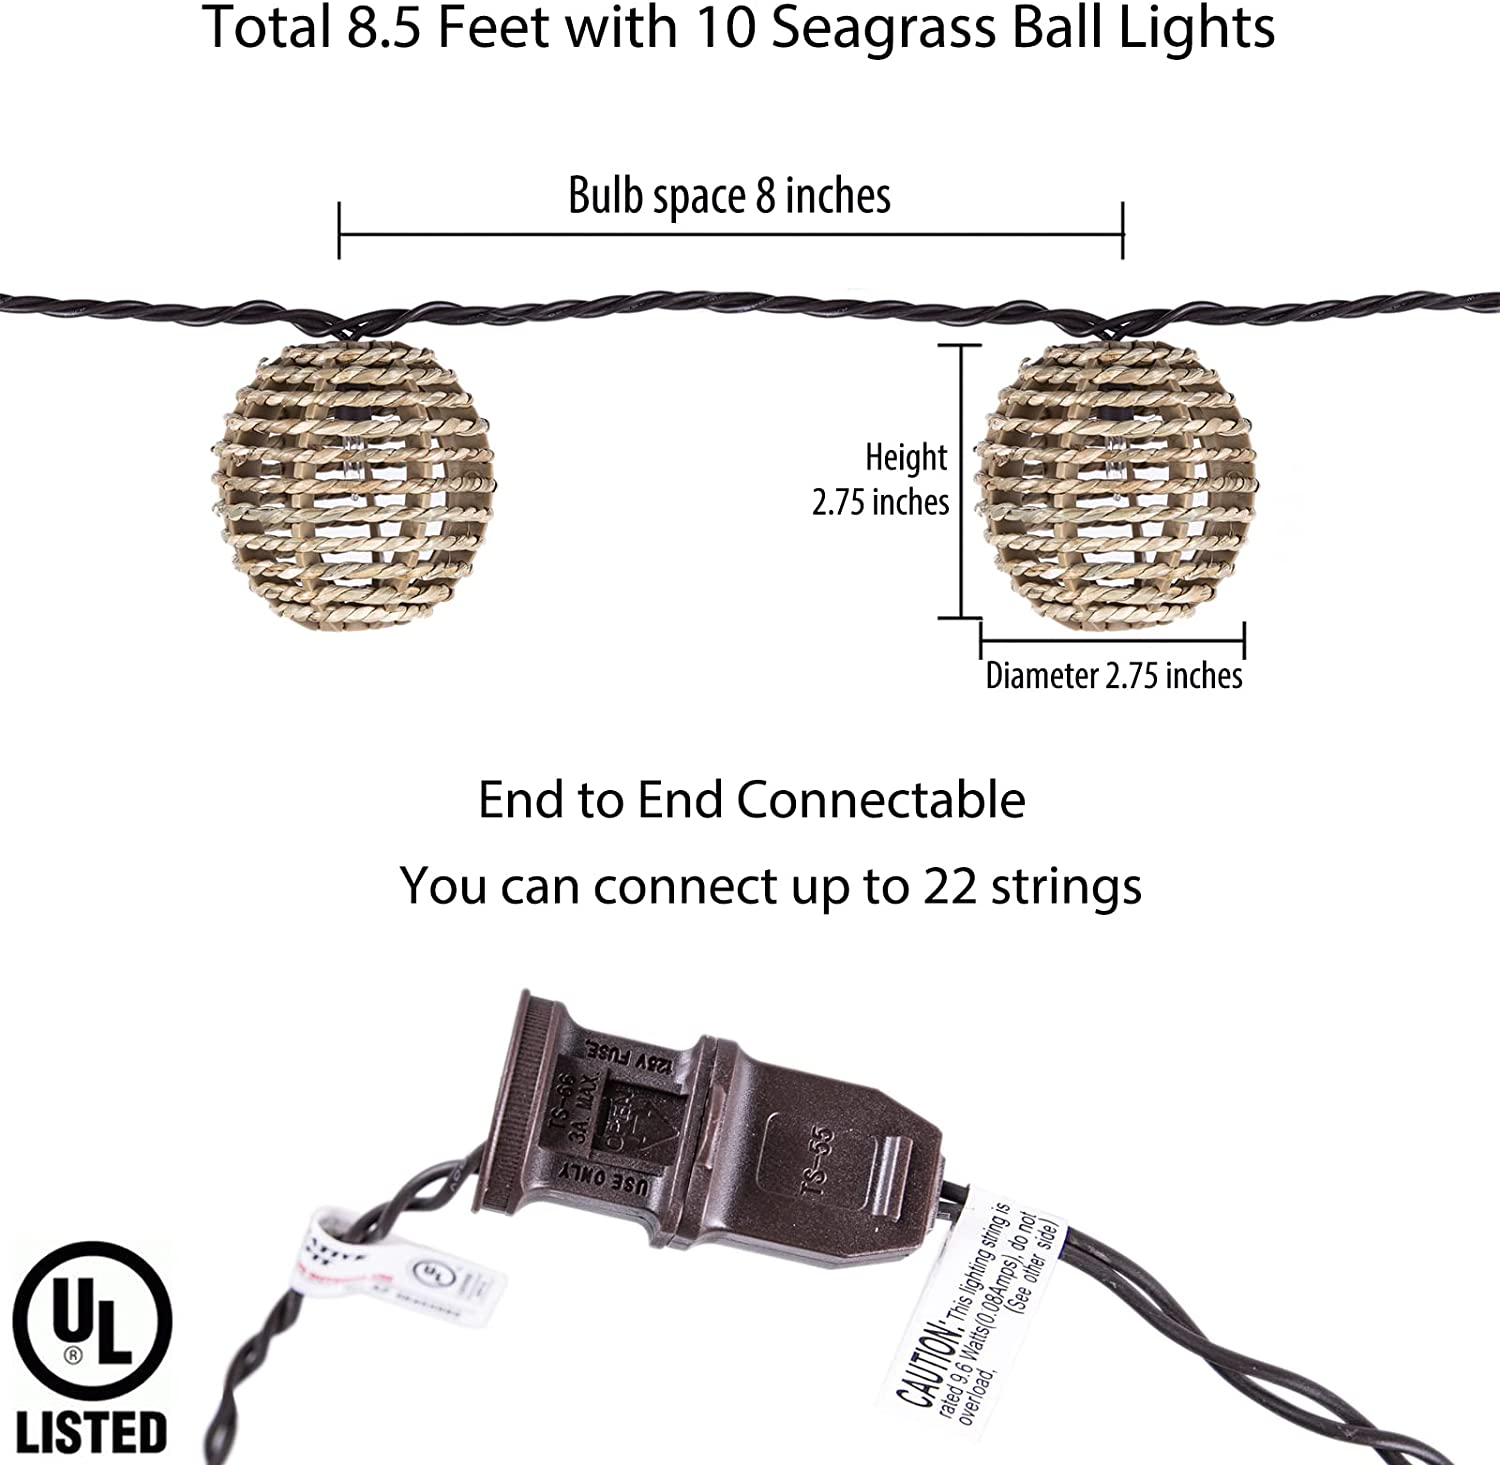 UL listed rattan ball string light